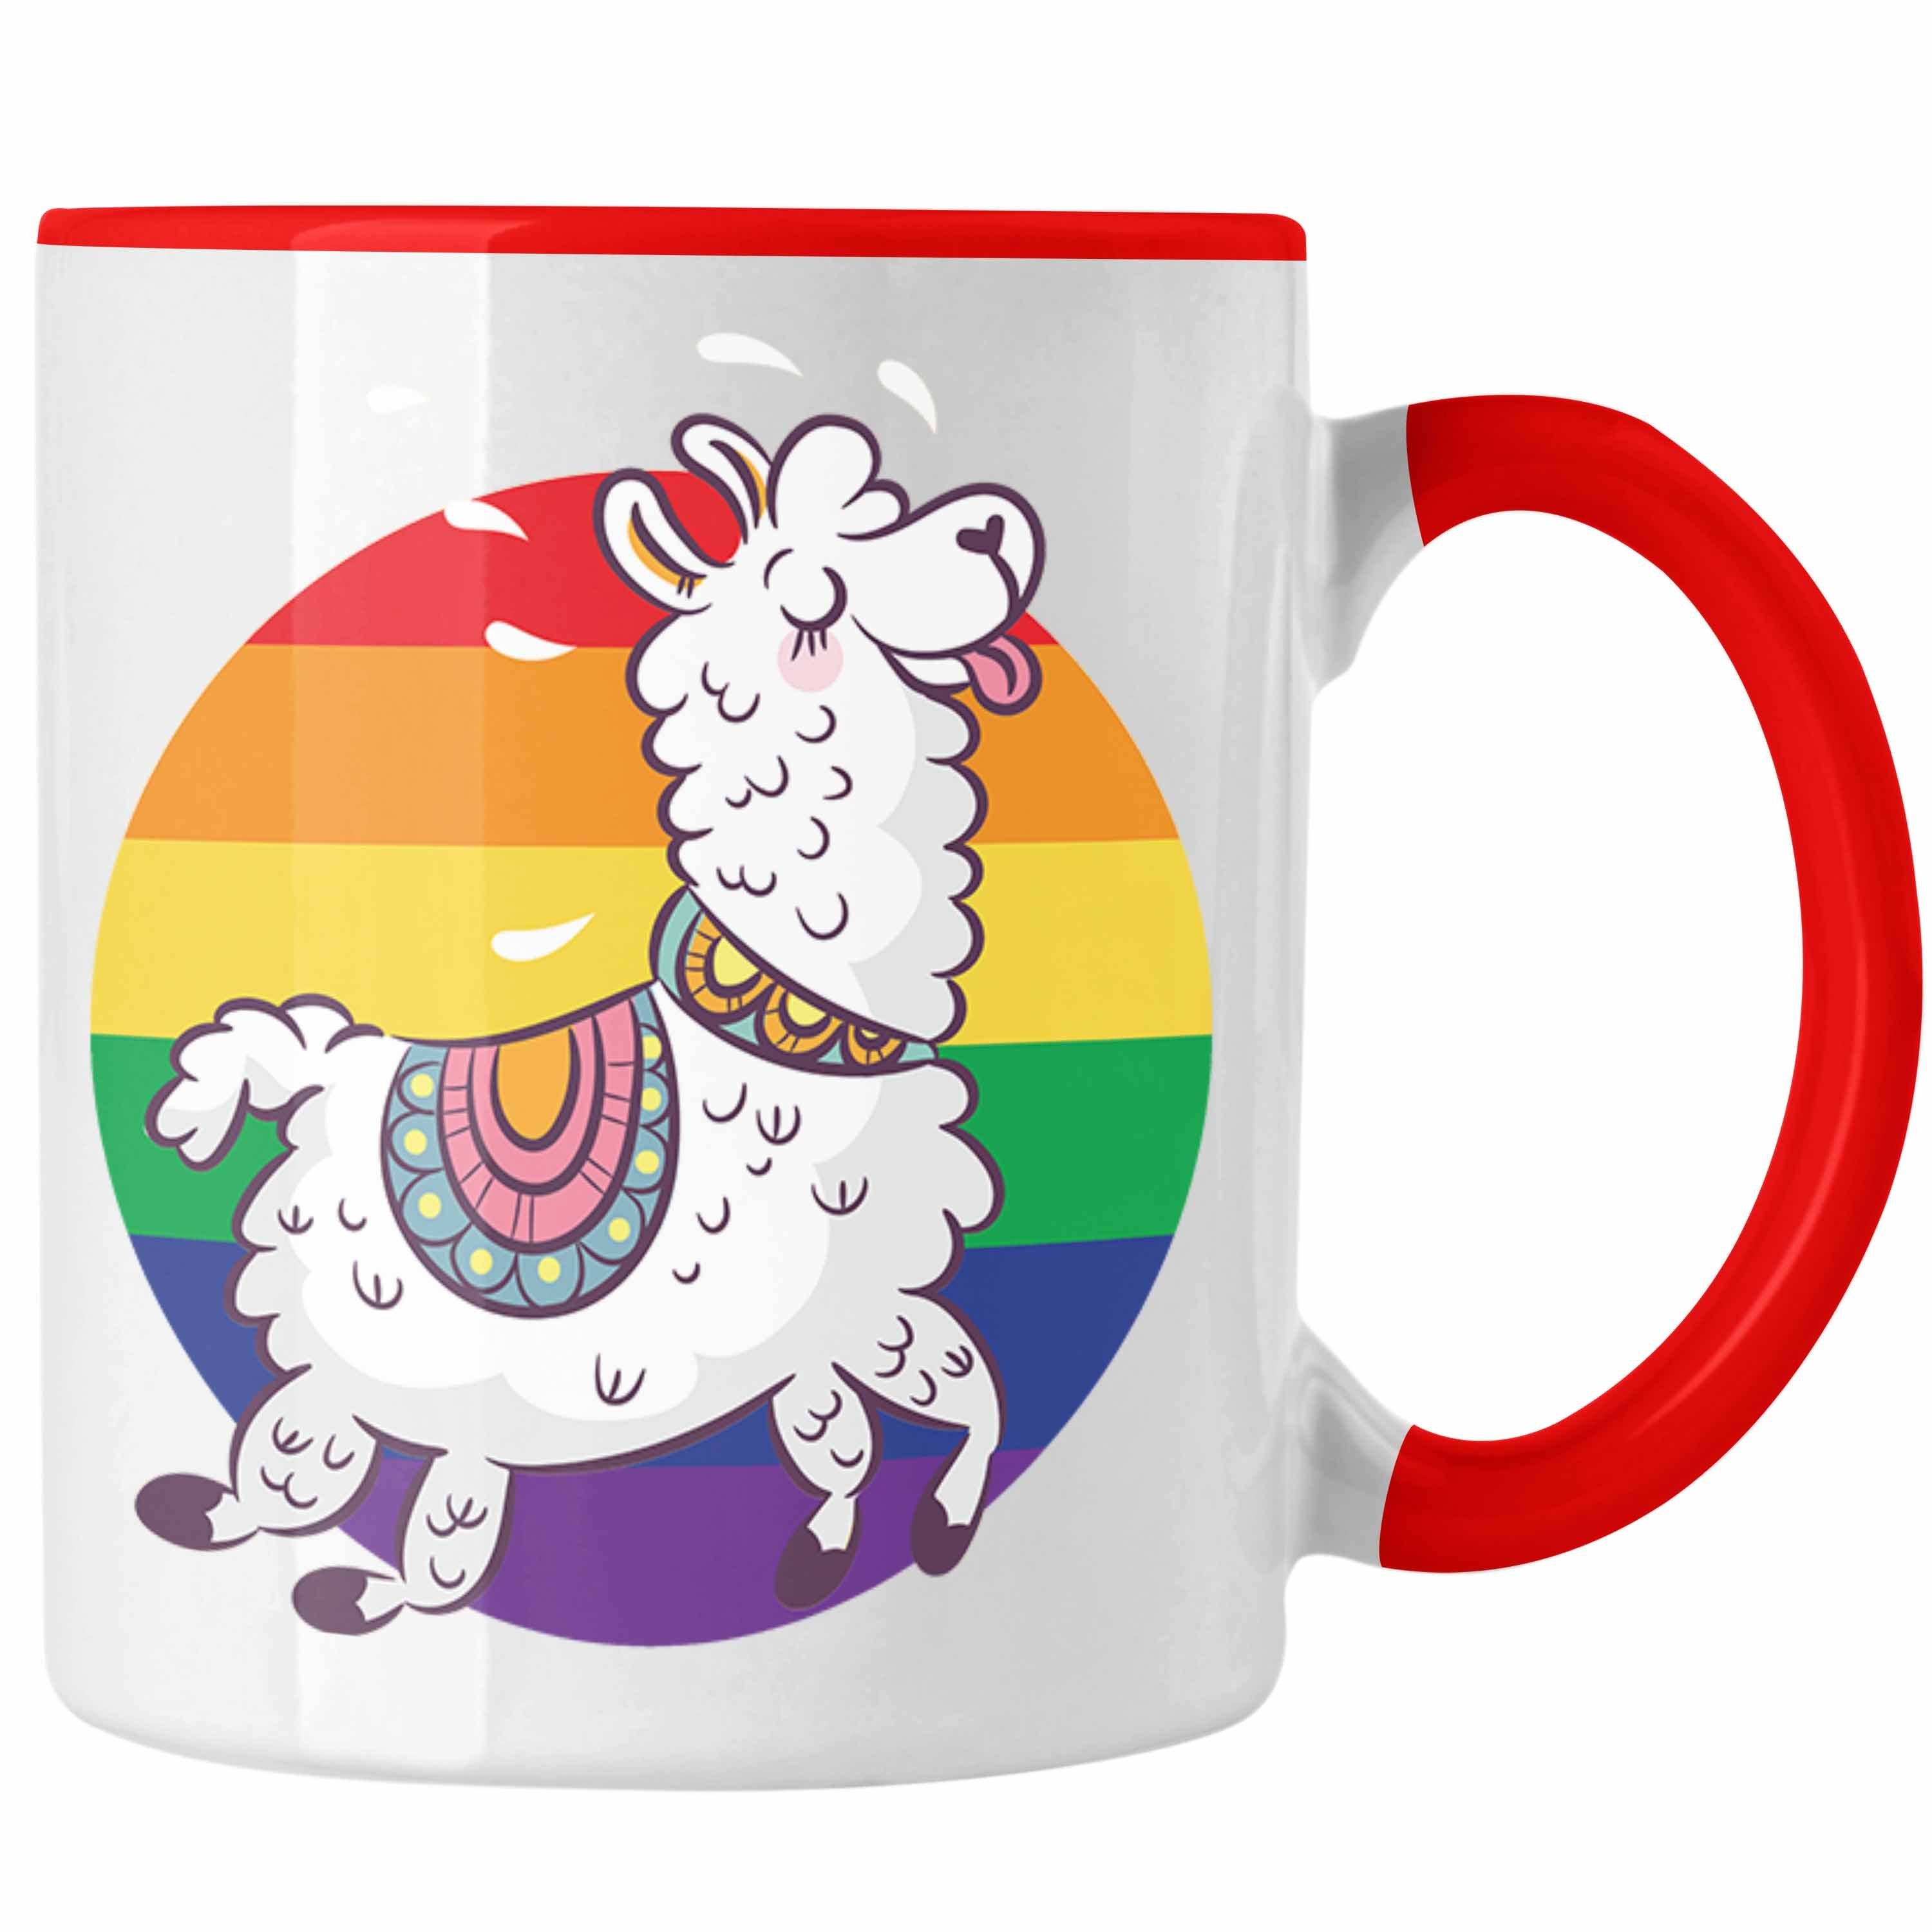 Trendation Tasse Trendation - Regenbogen Tasse Geschenk LGBT Schwule Lesben Transgender Grafik Pride Tolles Llama Rot